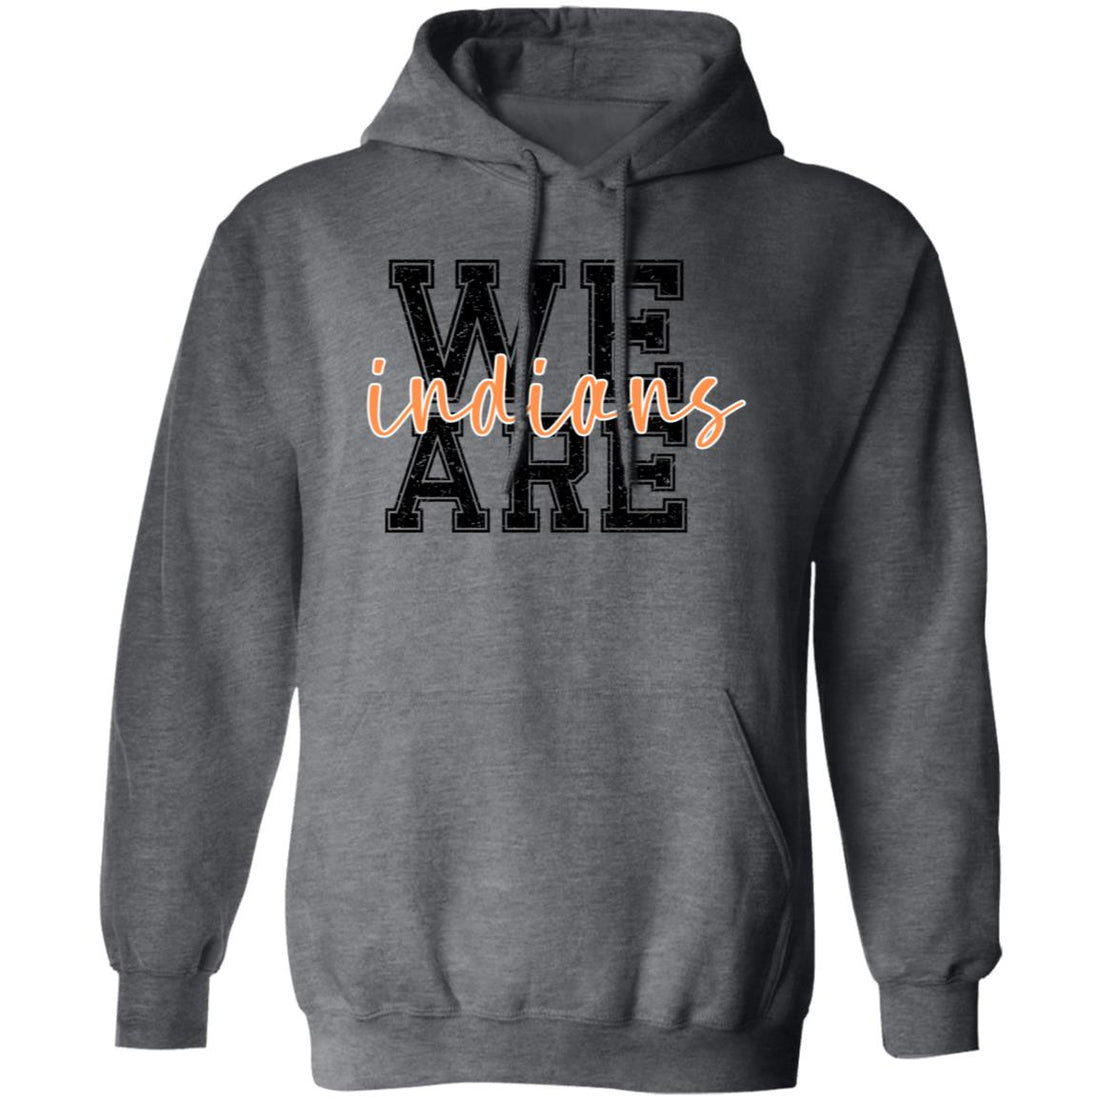 We Are Indians Pullover Hoodie - Sweatshirts - Positively Sassy - We Are Indians Pullover Hoodie